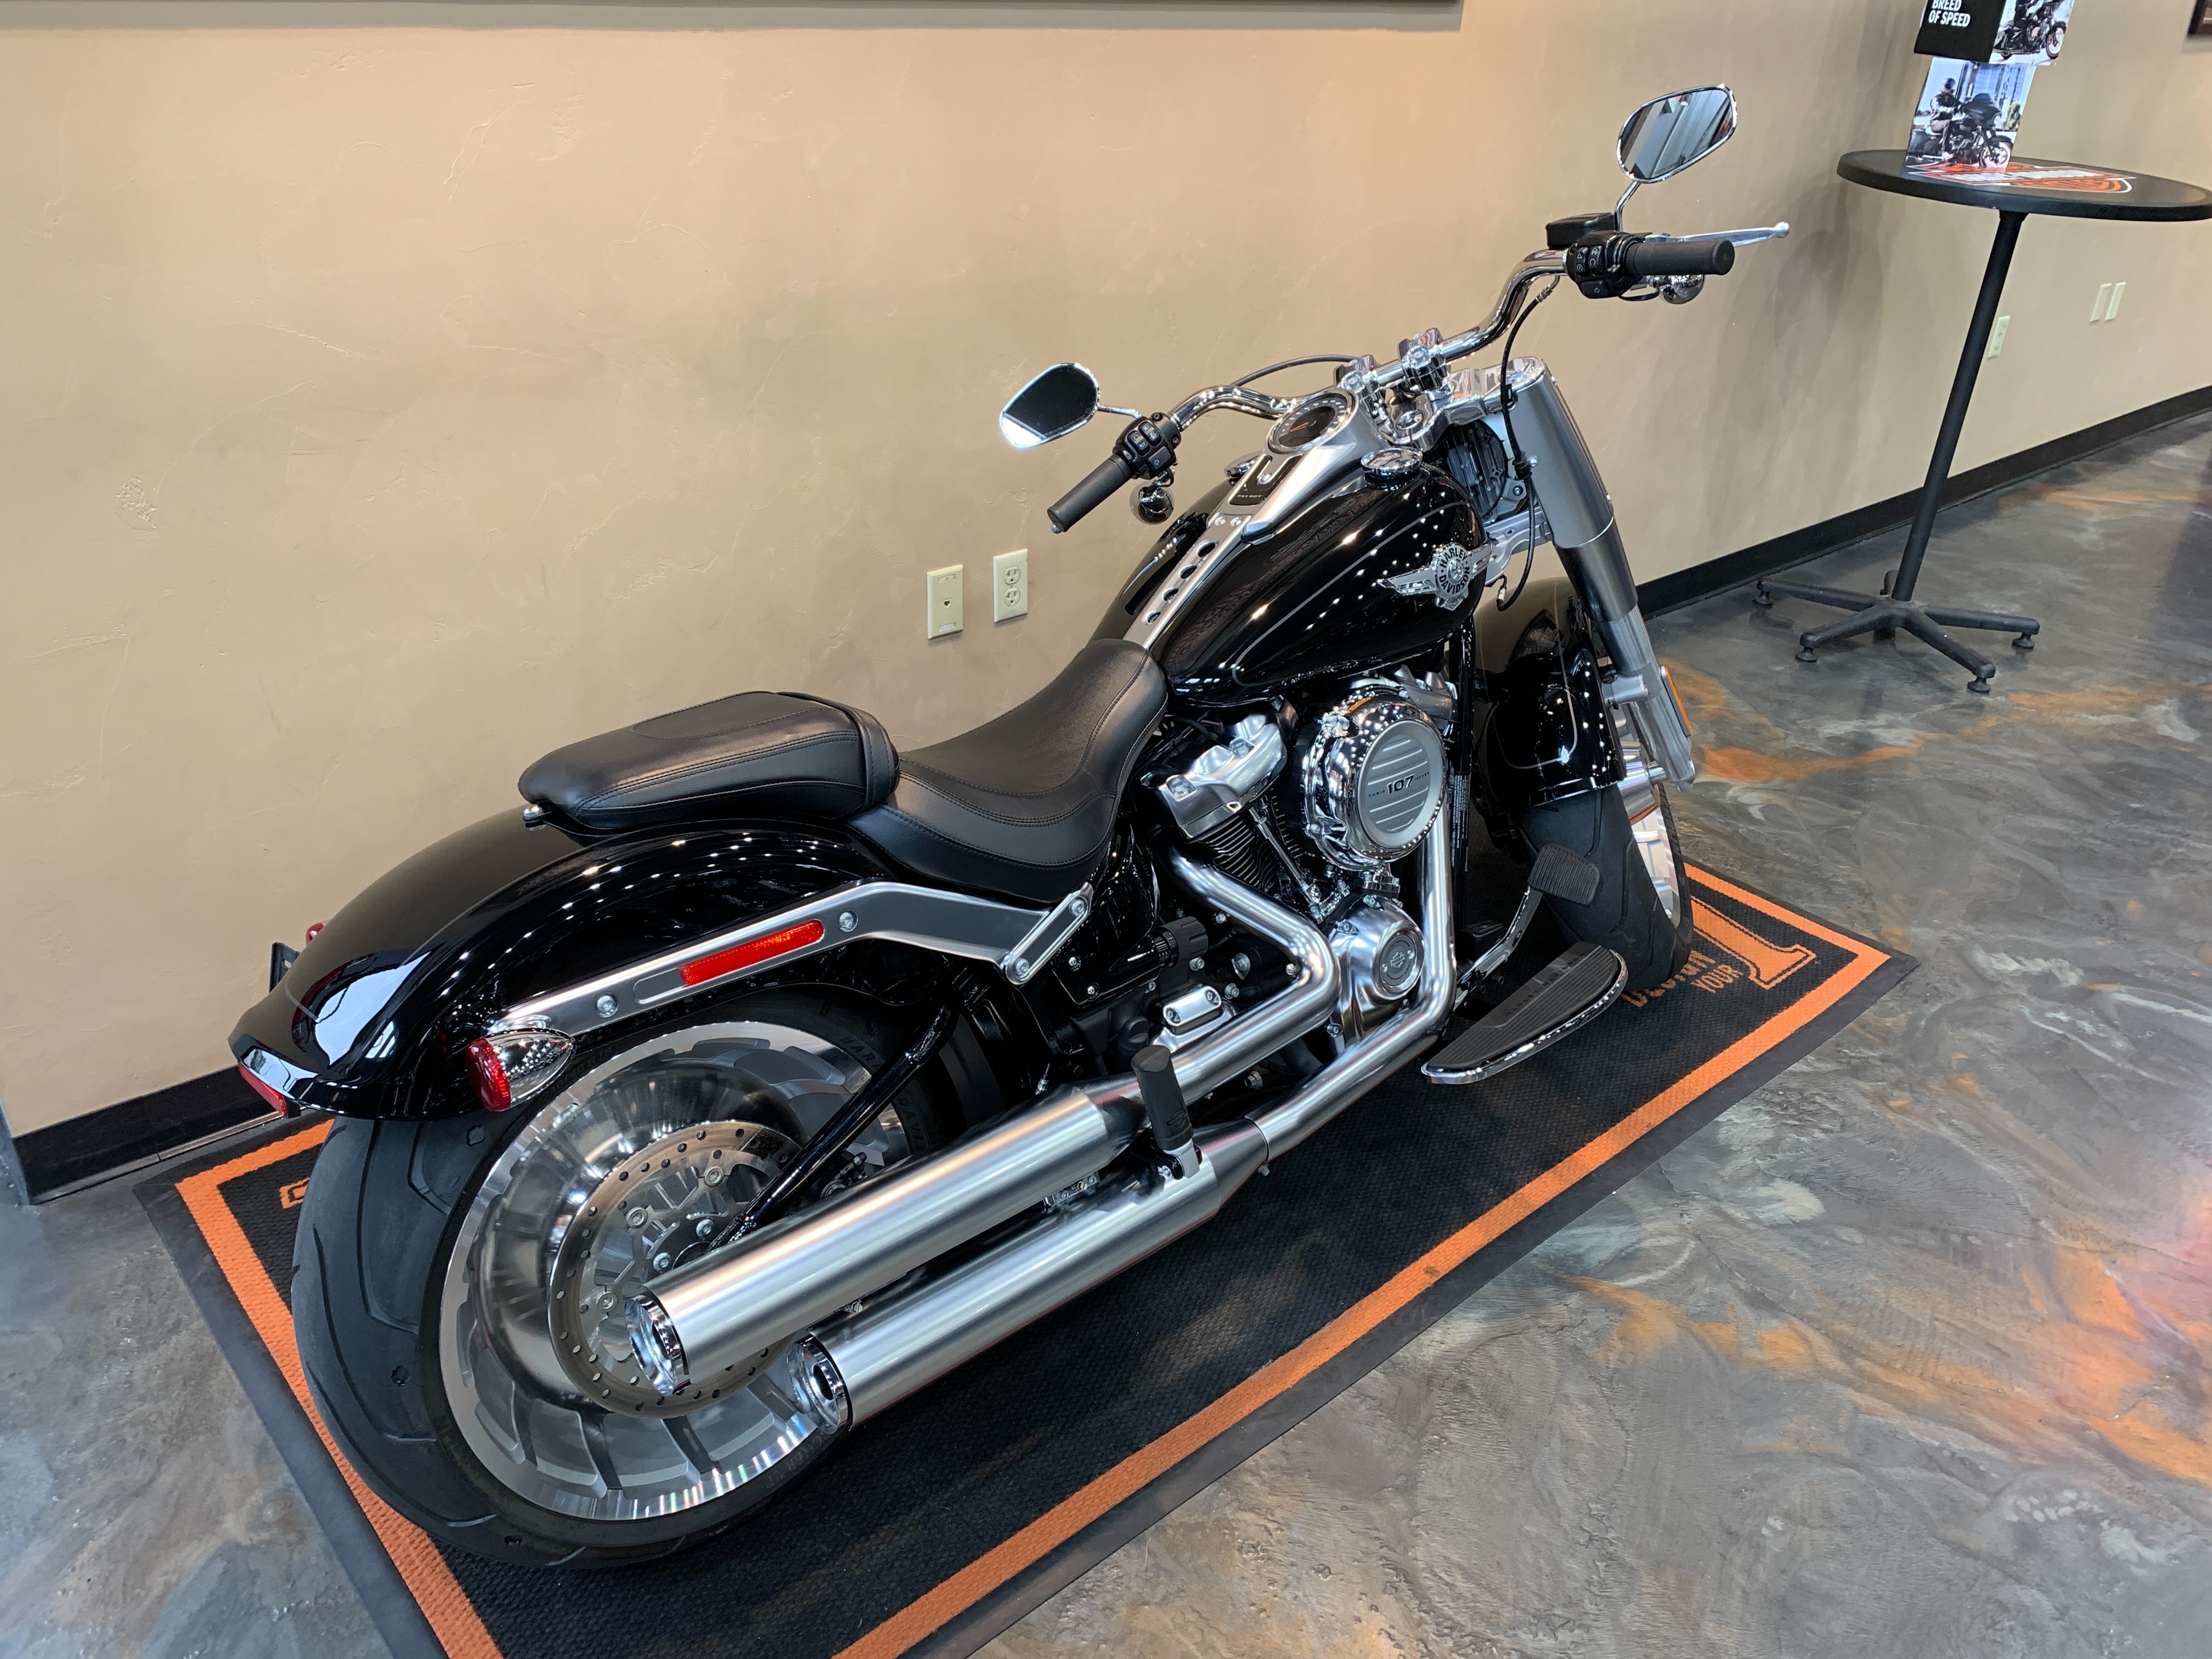 2019 Harley-Davidson Softail Fat Boy at Vandervest Harley-Davidson, Green Bay, WI 54303